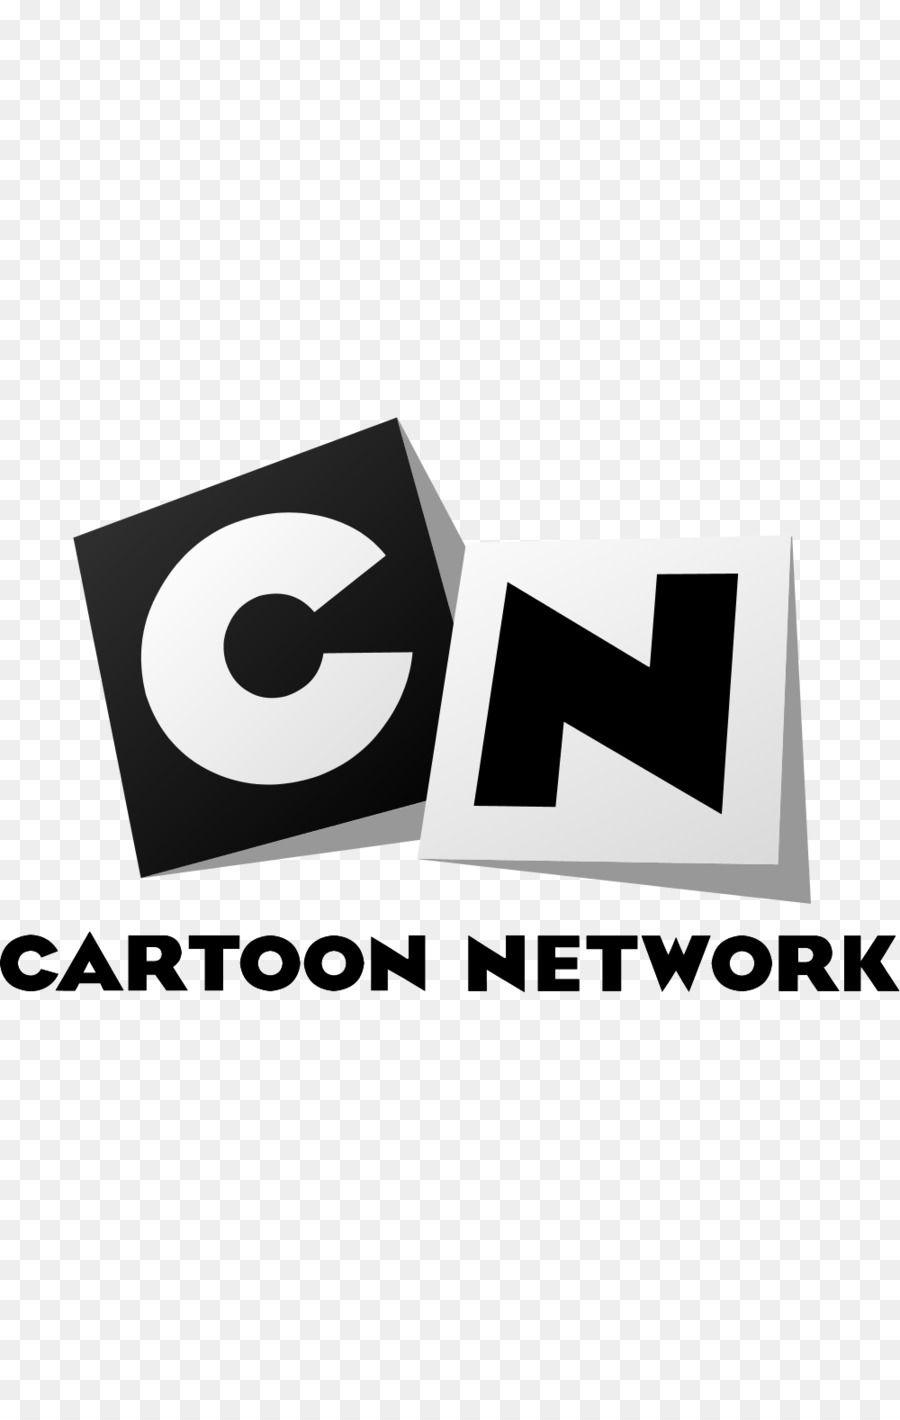 Cartoon Network Studios Logo - Cartoon Network Studios Television show - cartoon network png ...